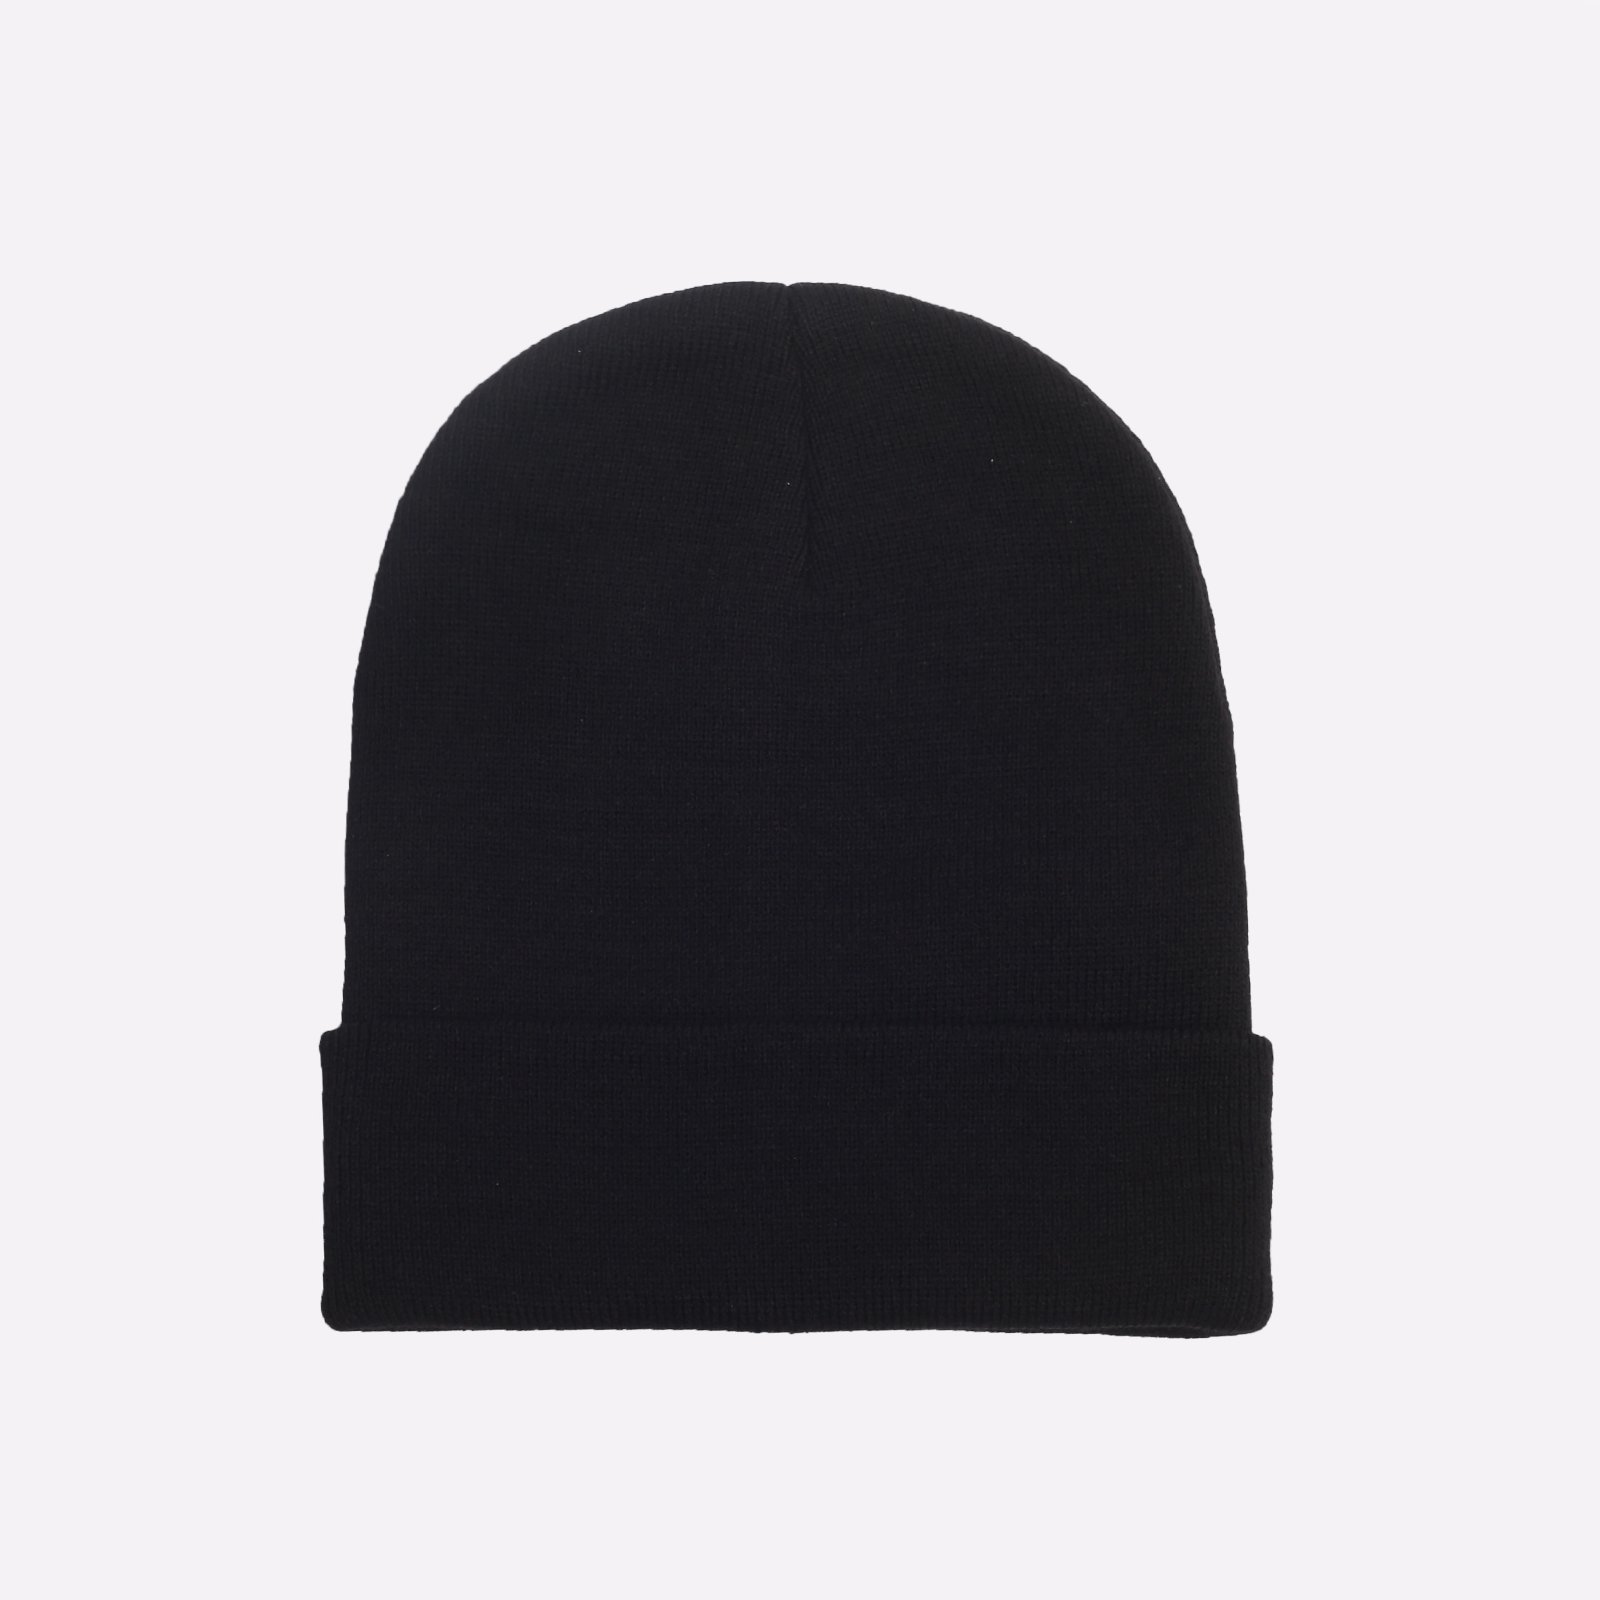  черная шапка Sneakerhead Blank Beanie Beanie/black - цена, описание, фото 1